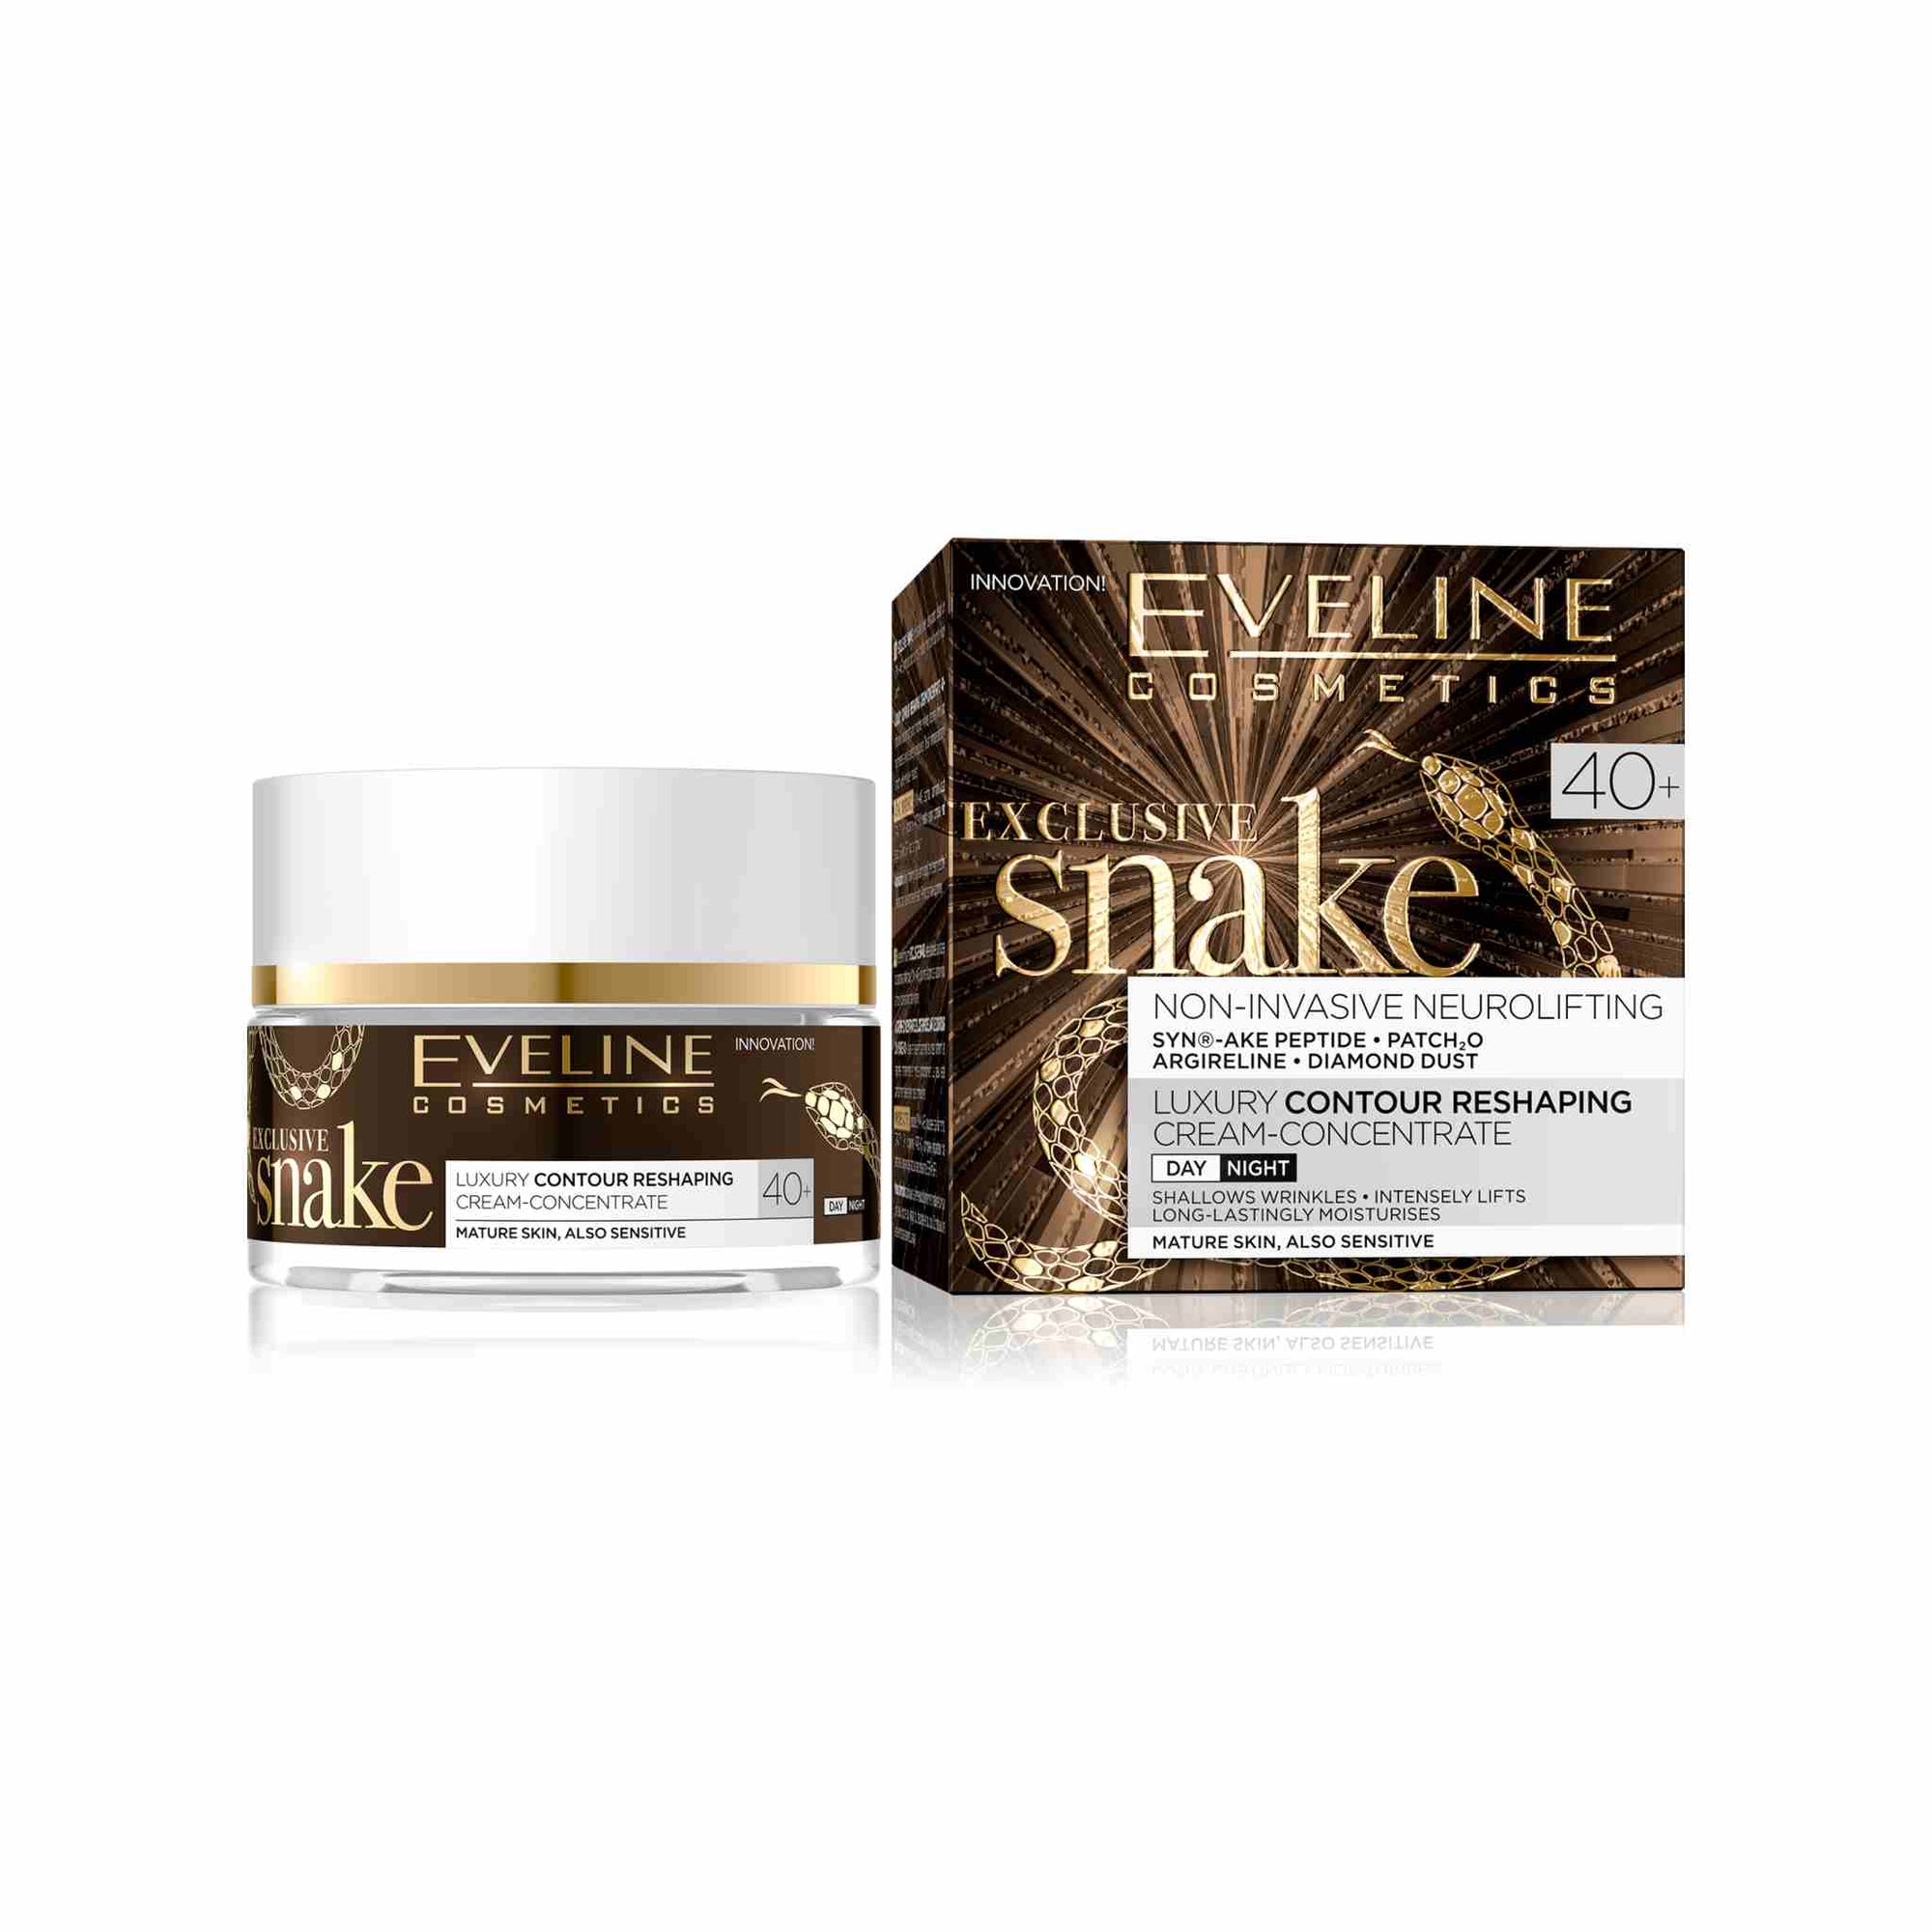 Exclusive Snake Neurolifting Luxury Contour Reshaping Face Cream 40+